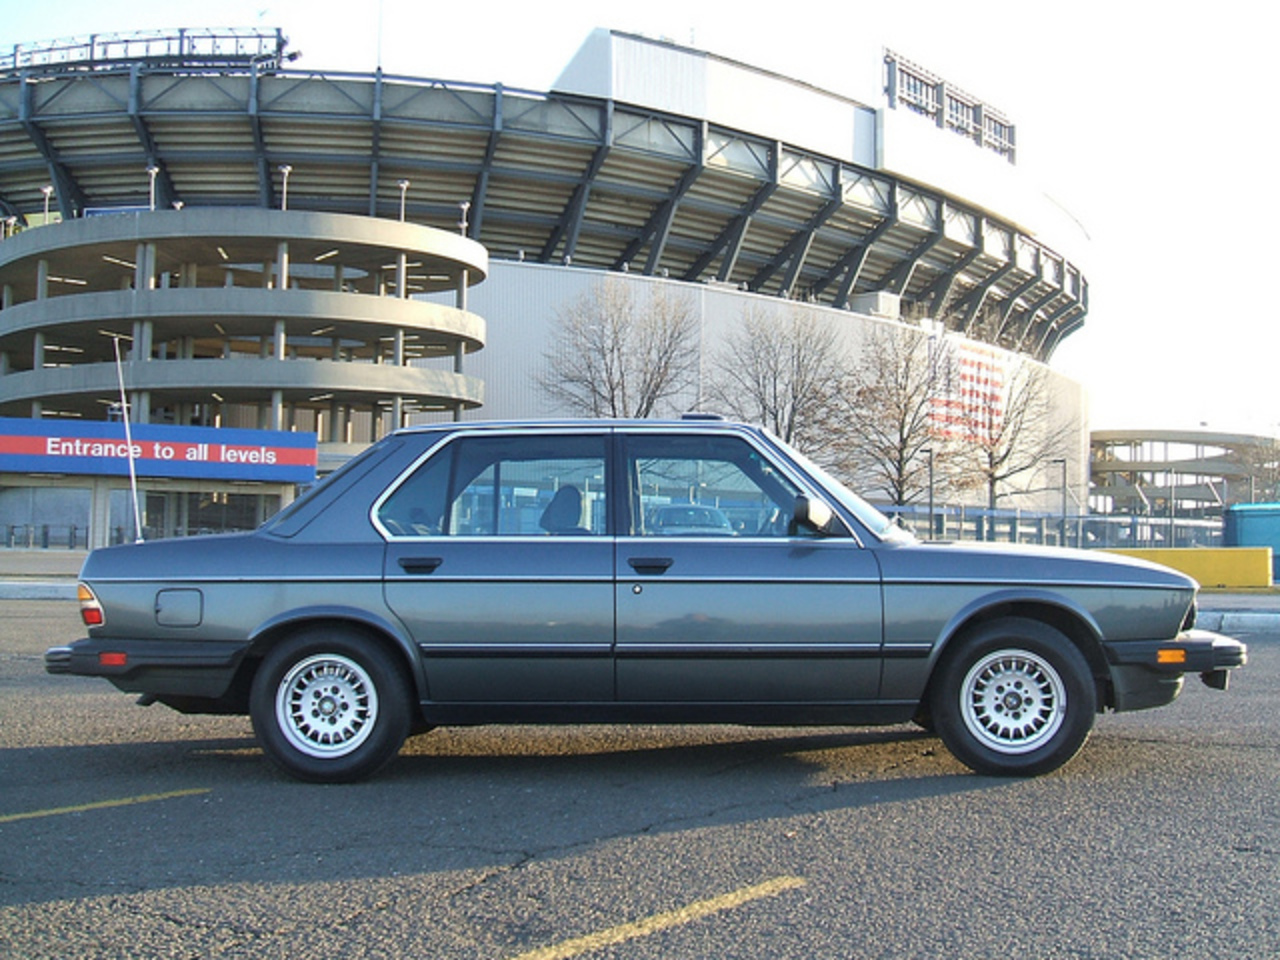 1985 BMW 524 td | Flickr - Photo Sharing!